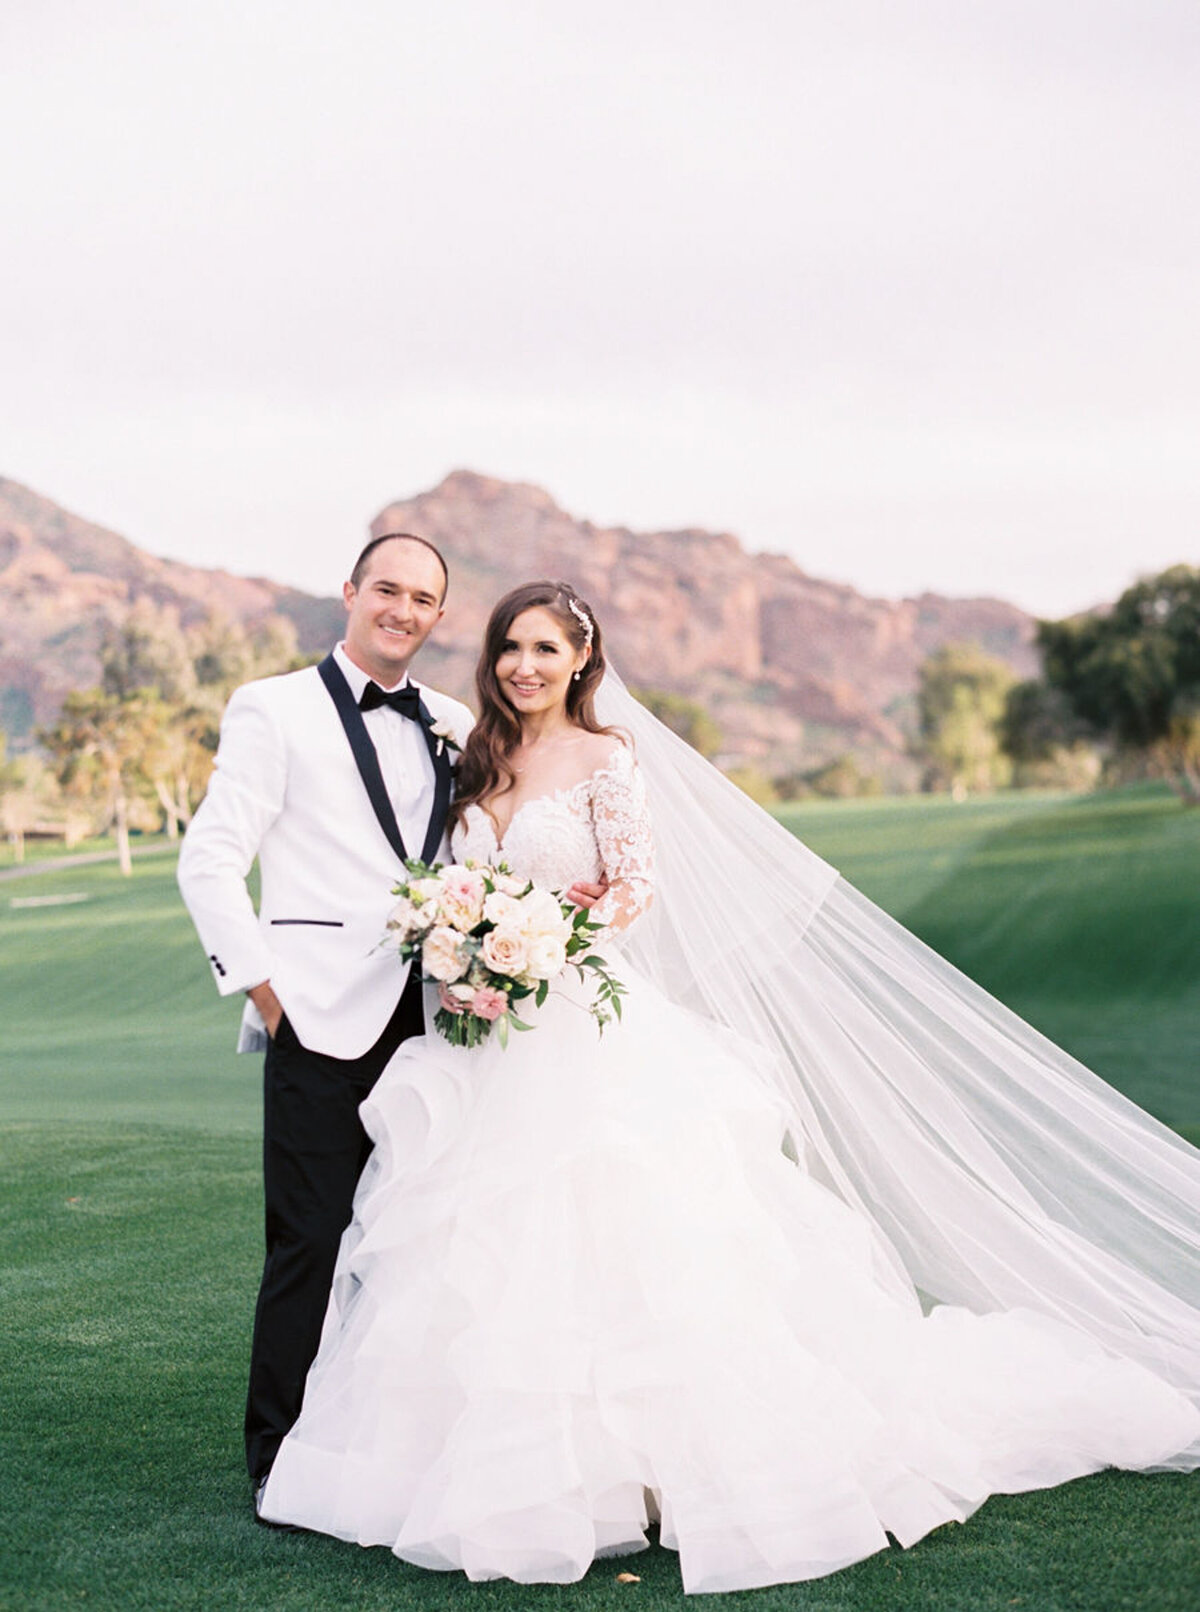 Alexandria & Stephen | Paradise Valley Country Club, Arizona | Mary Claire Photography | Arizona & Destination Fine Art Wedding Photographer